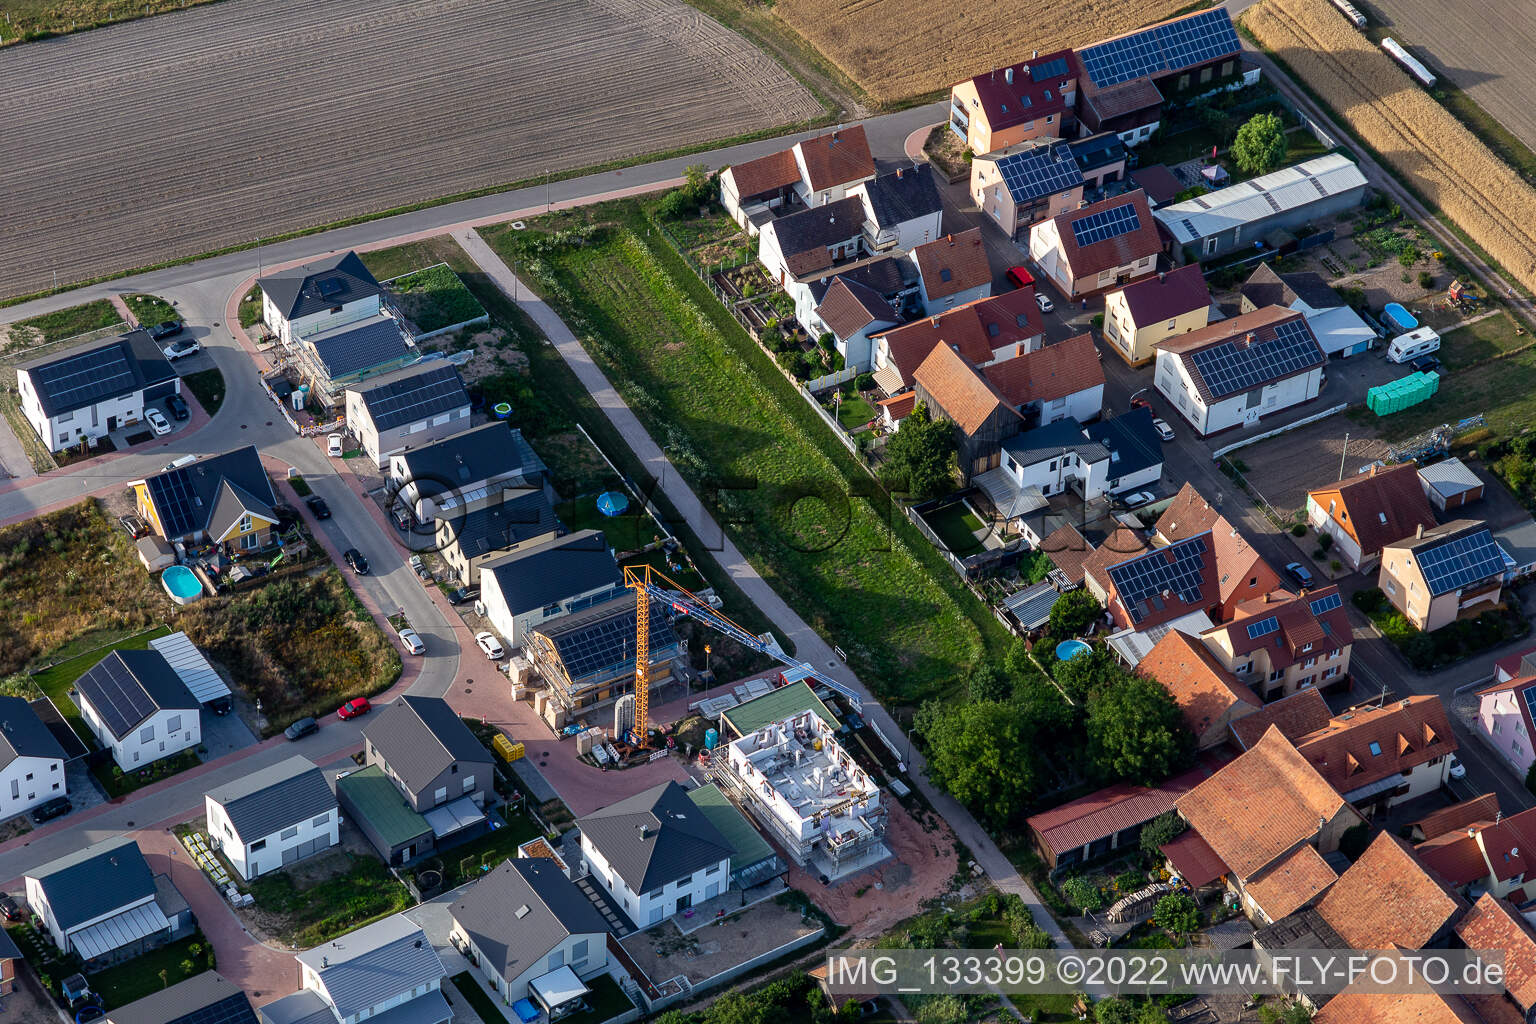 Aerial view of New development area in Sandblatt in Hatzenbühl in the state Rhineland-Palatinate, Germany